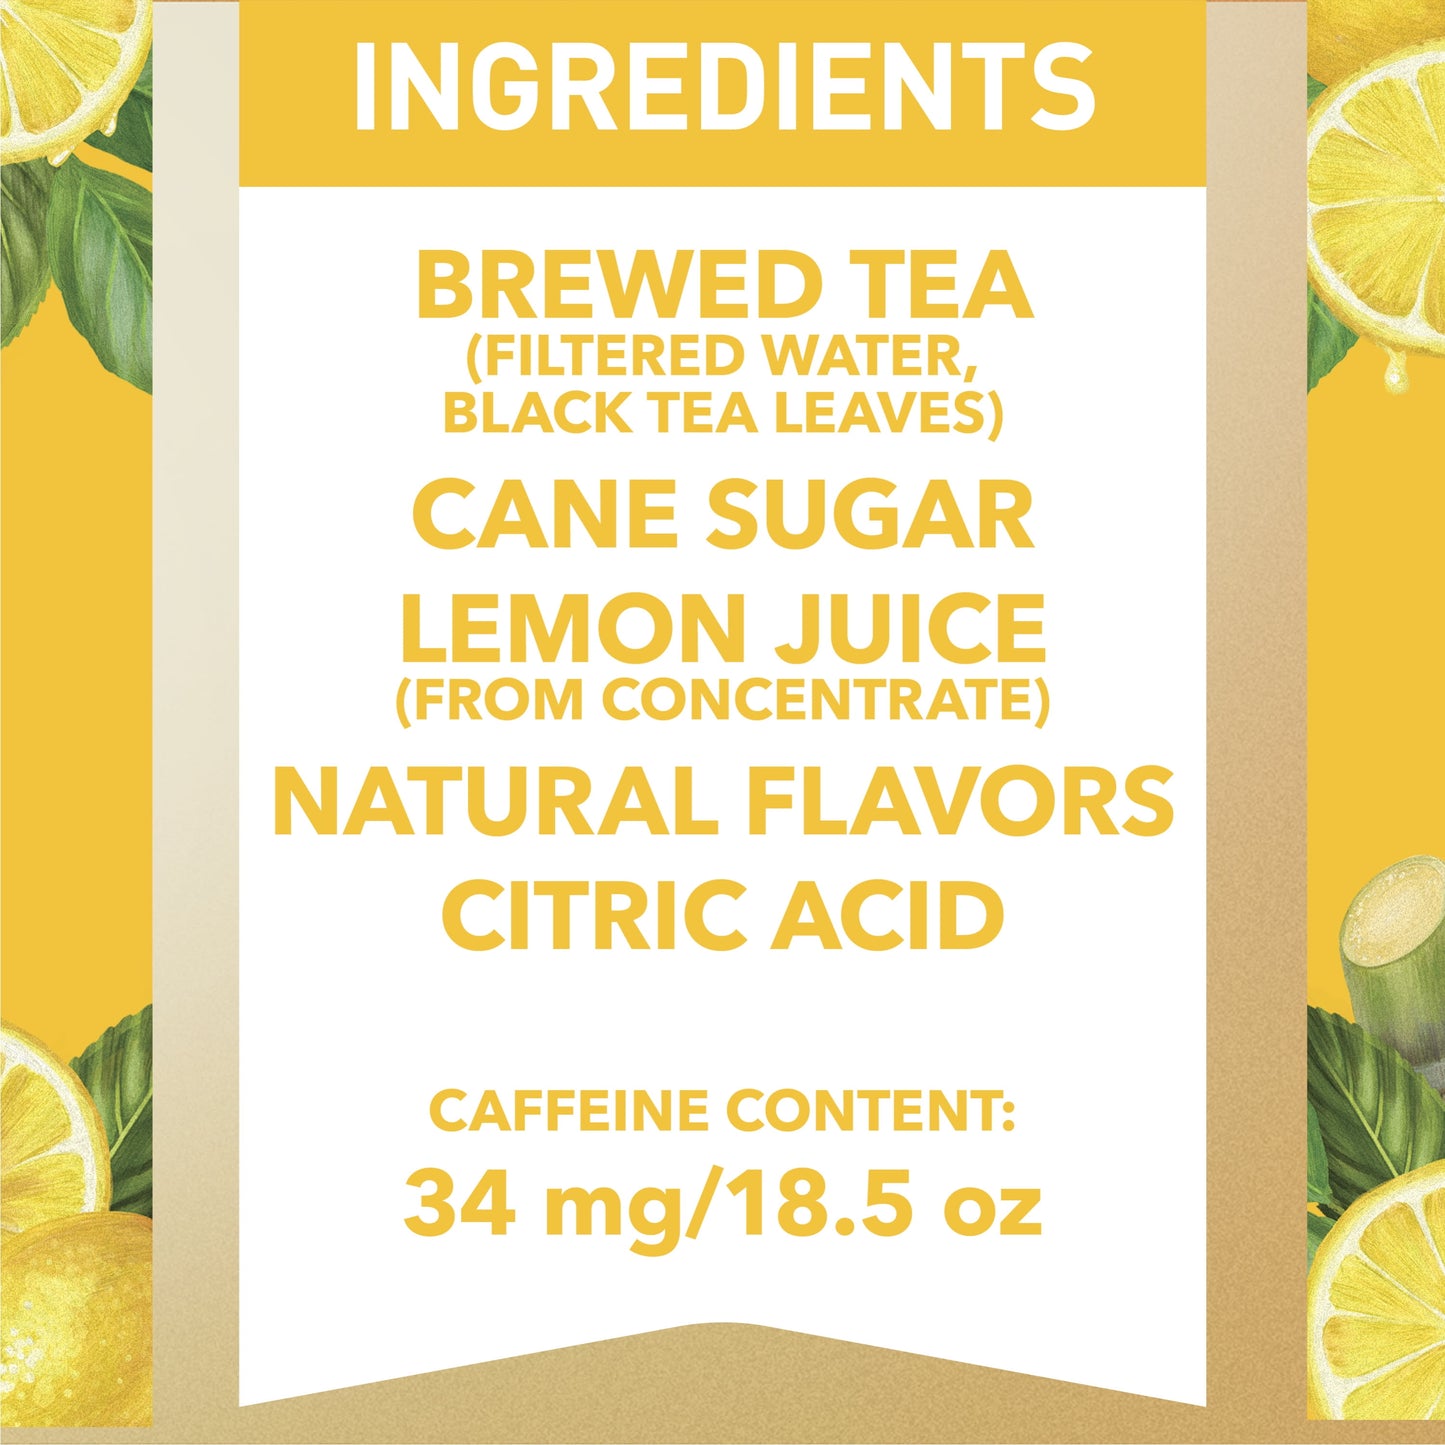 Gold Peak Real Brewed Tea Lemonade Flavored Iced Tea Drink, 52 fl oz